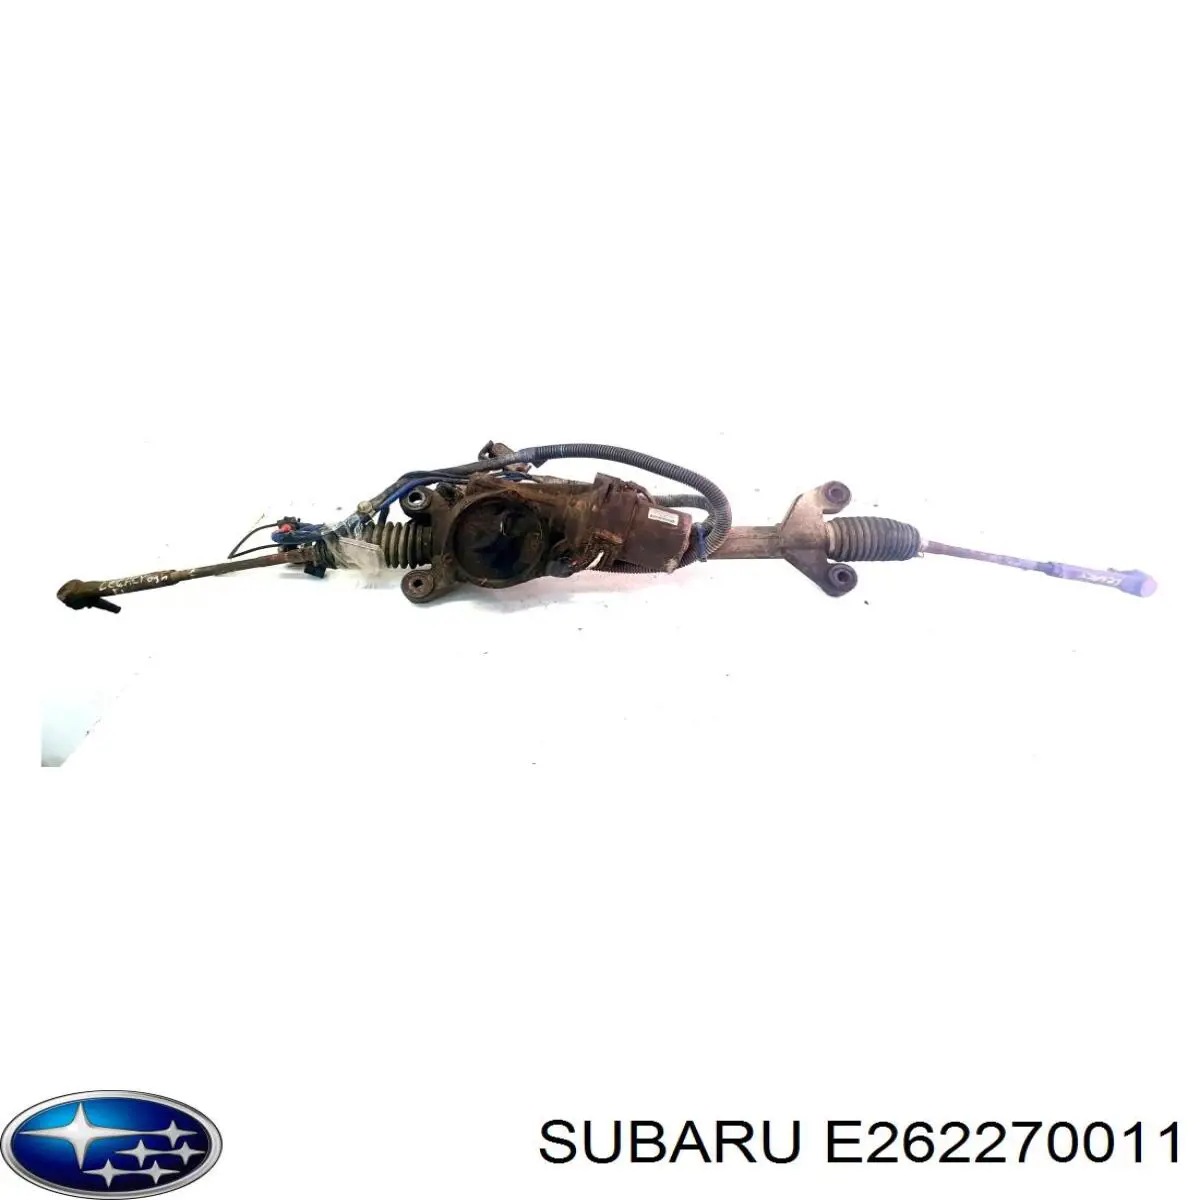 E262270011 Subaru cremallera de dirección